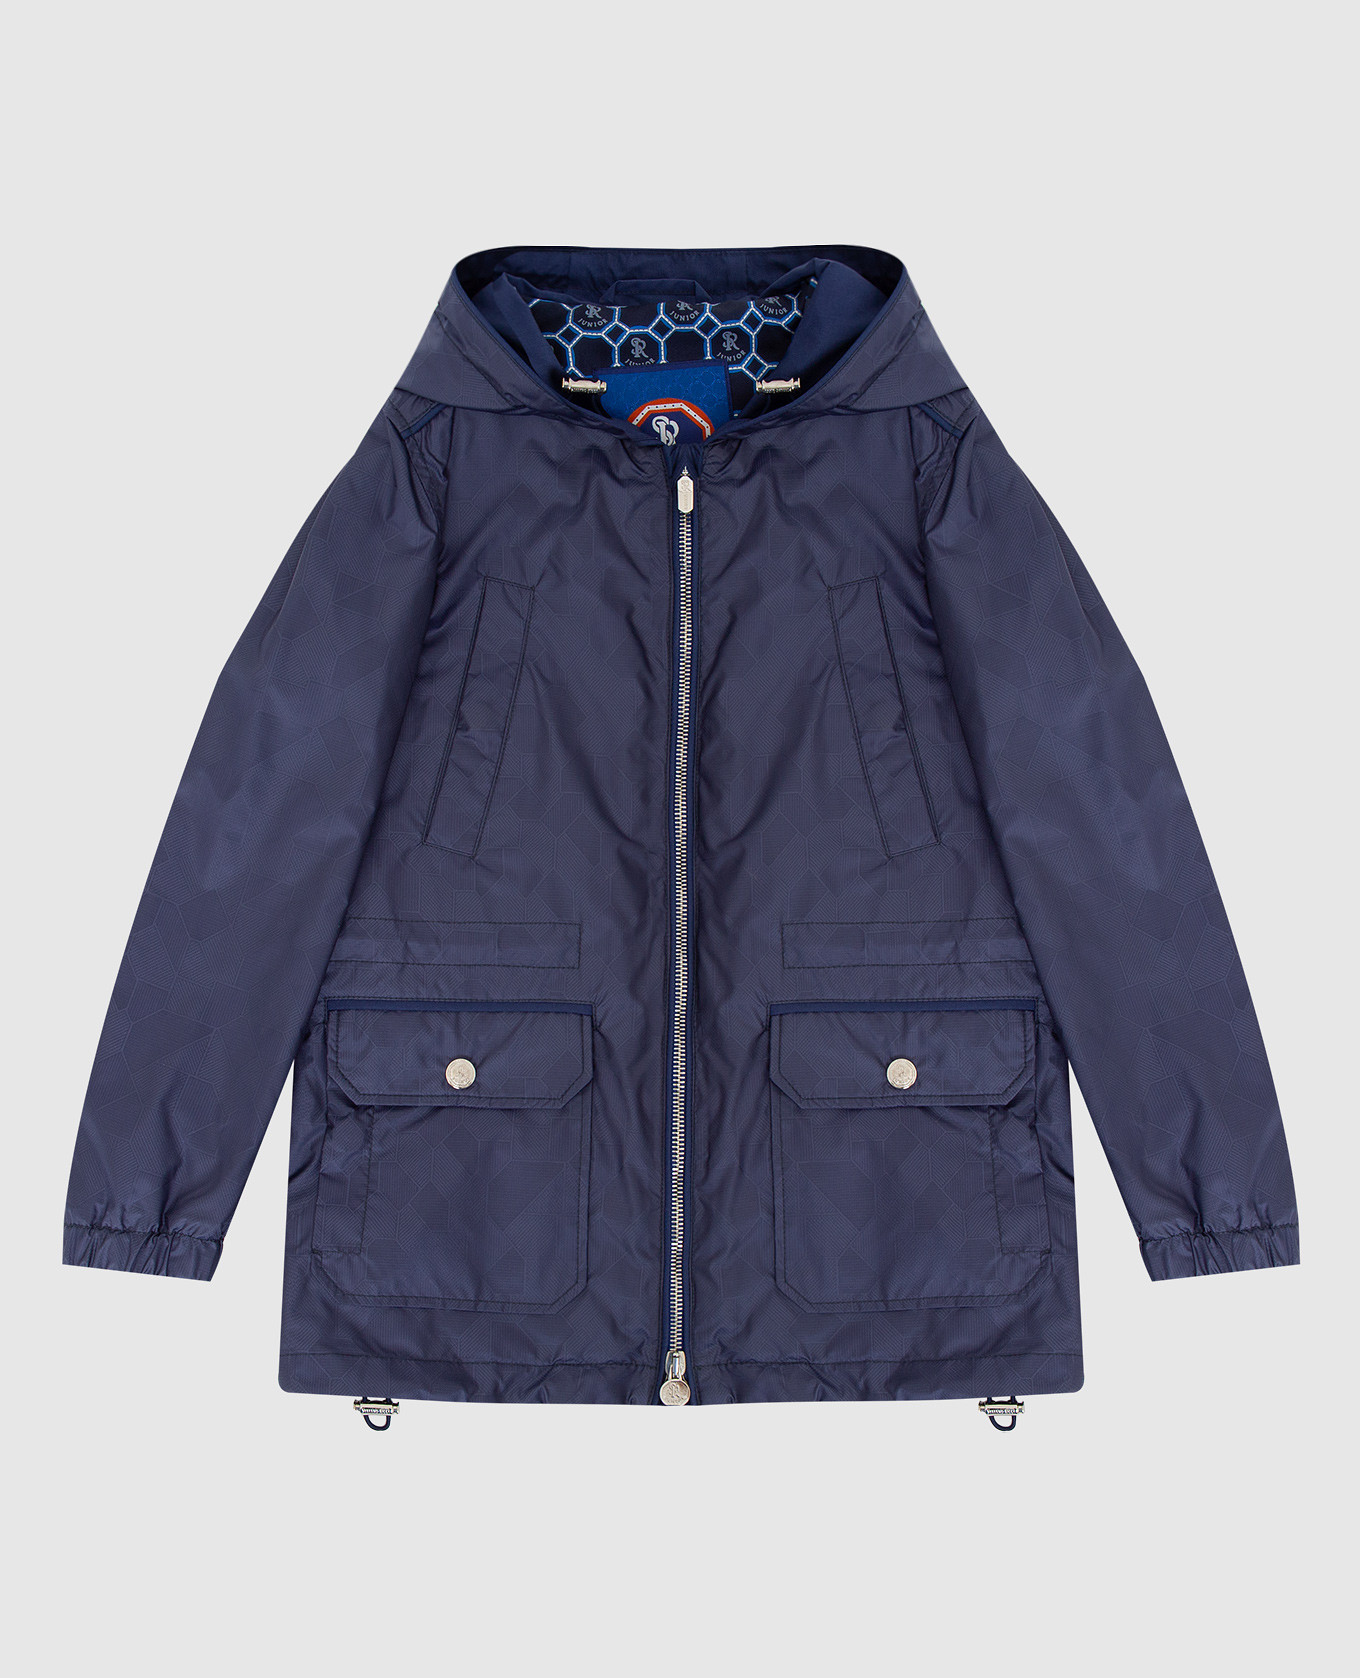 Children's navy blue patterned jacket